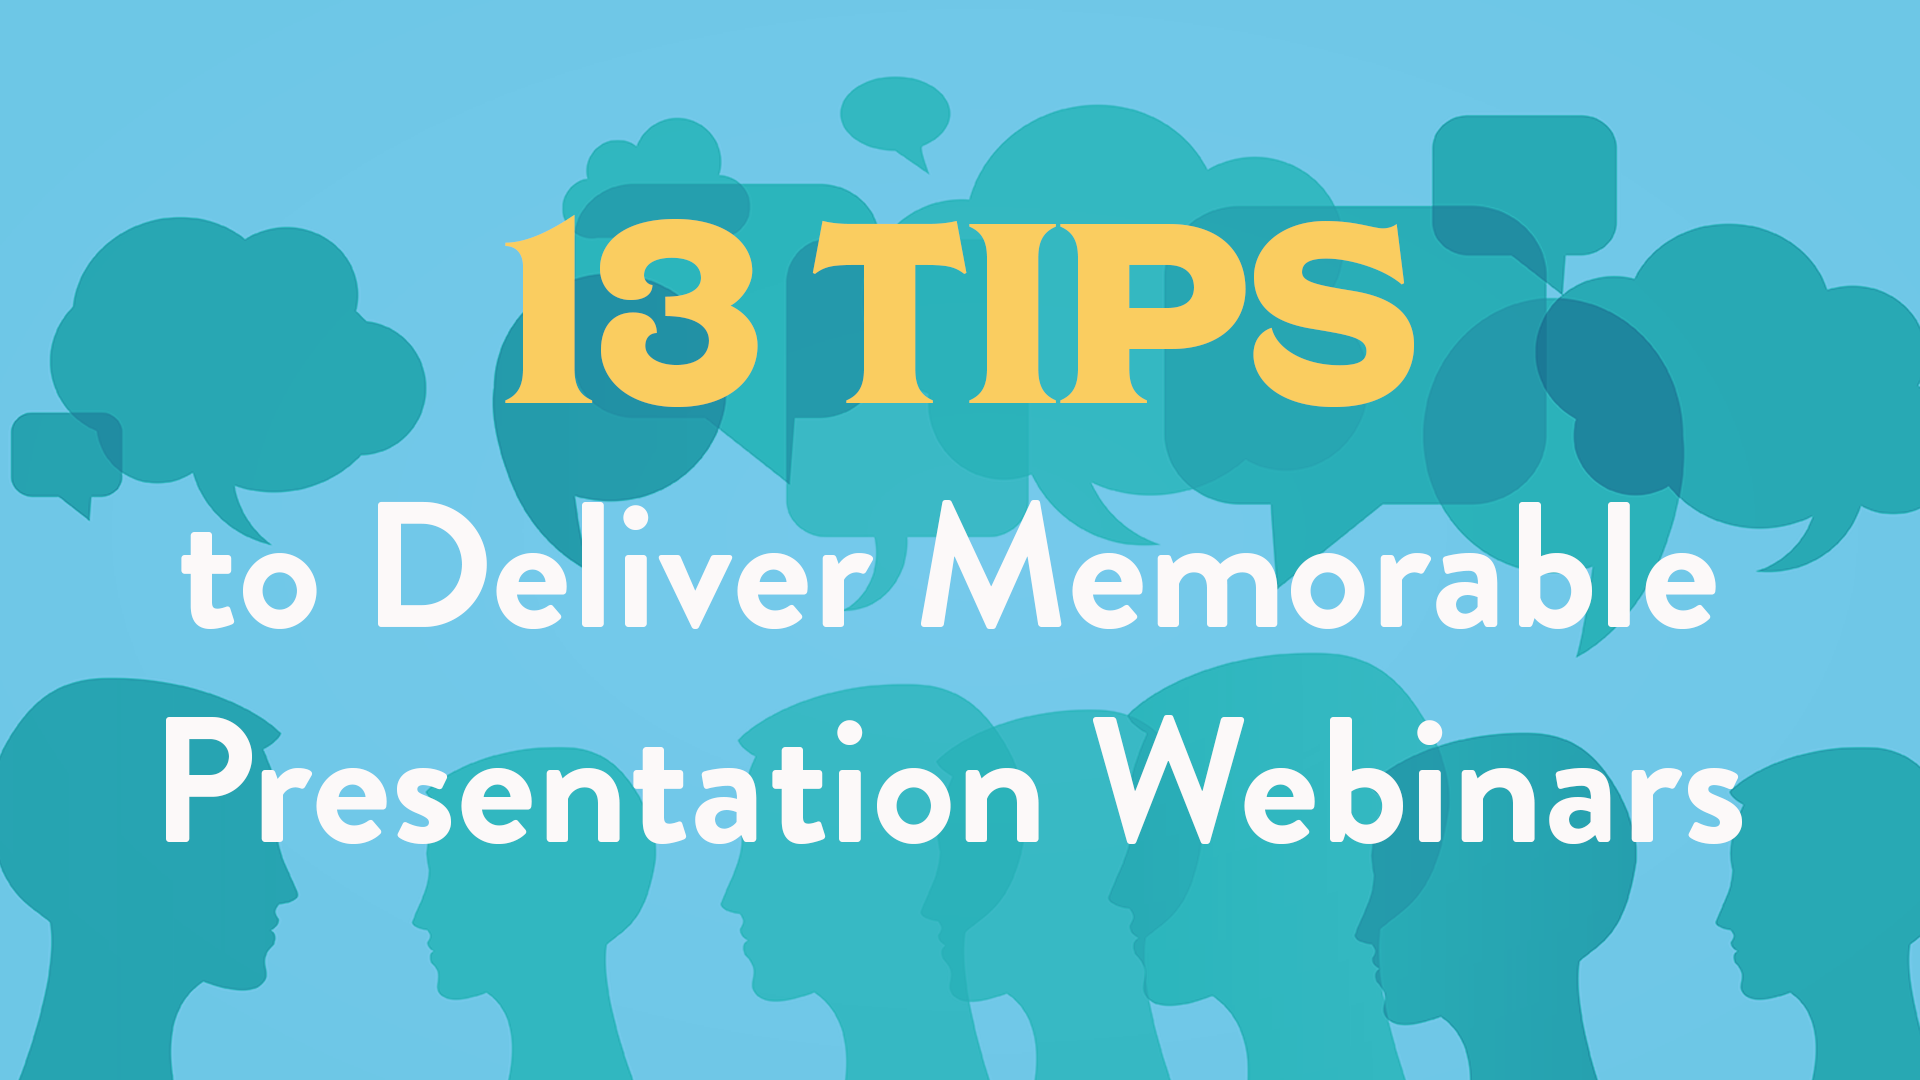 13 Tips to Deliver Memorable Presentation Webinars - Big Fish Presentations